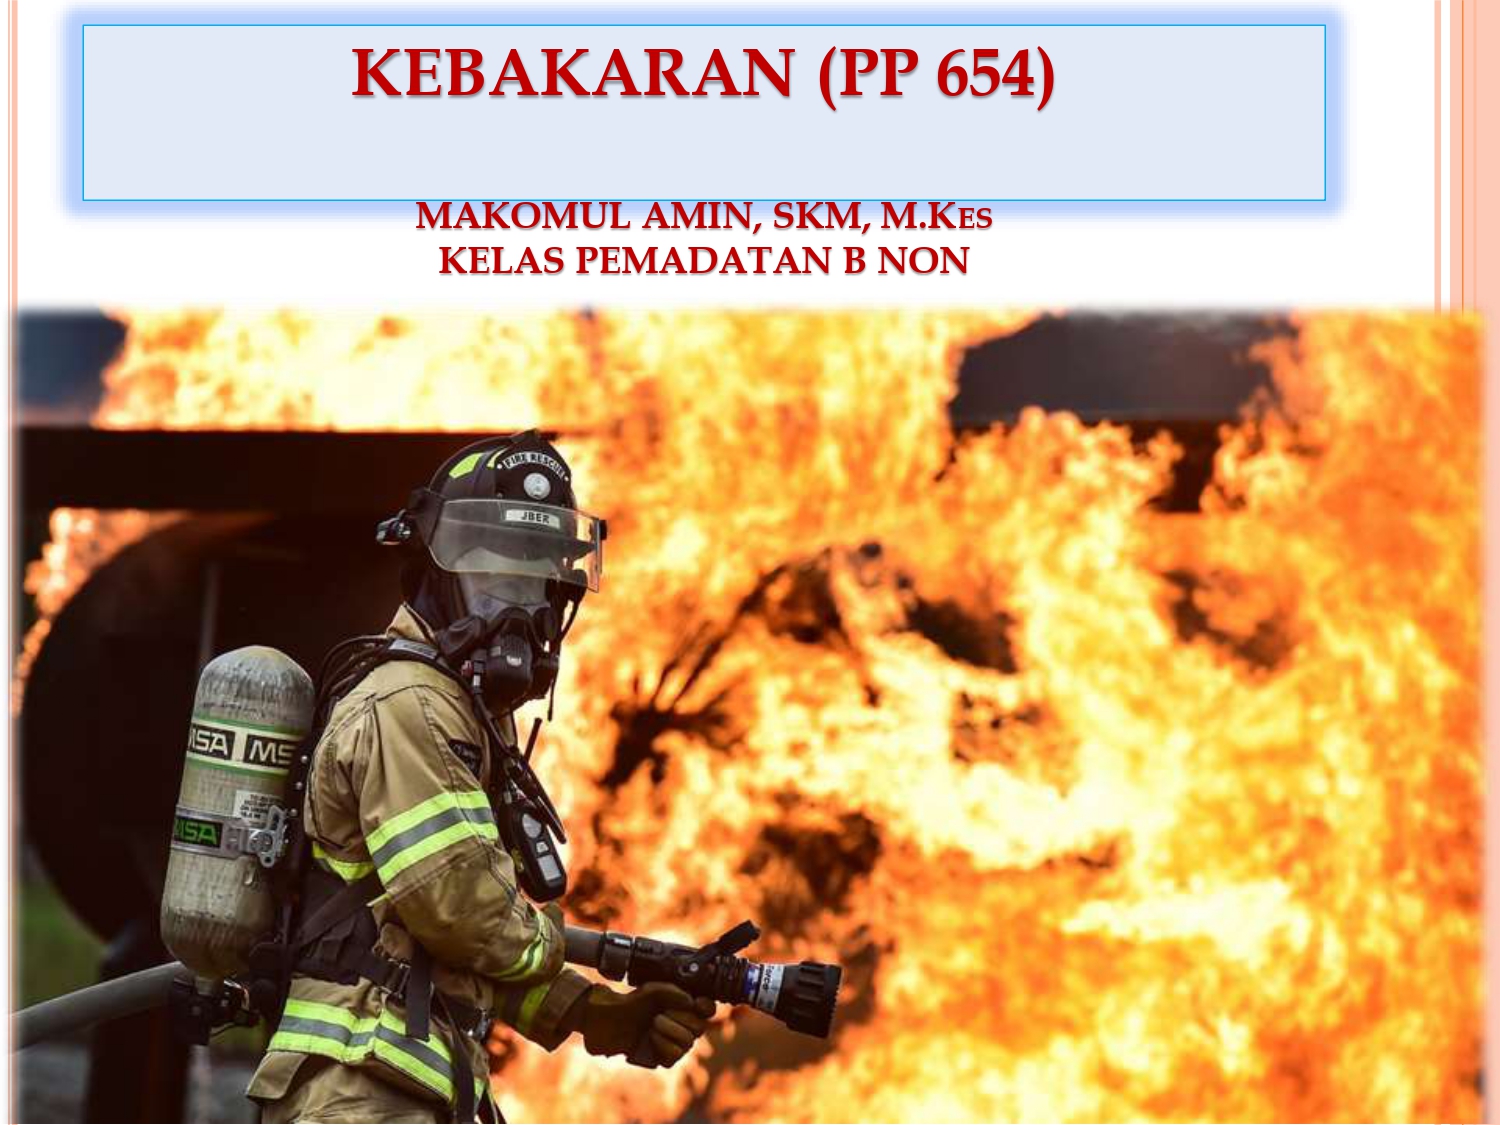 Kebakaran_PP654_B Non K3